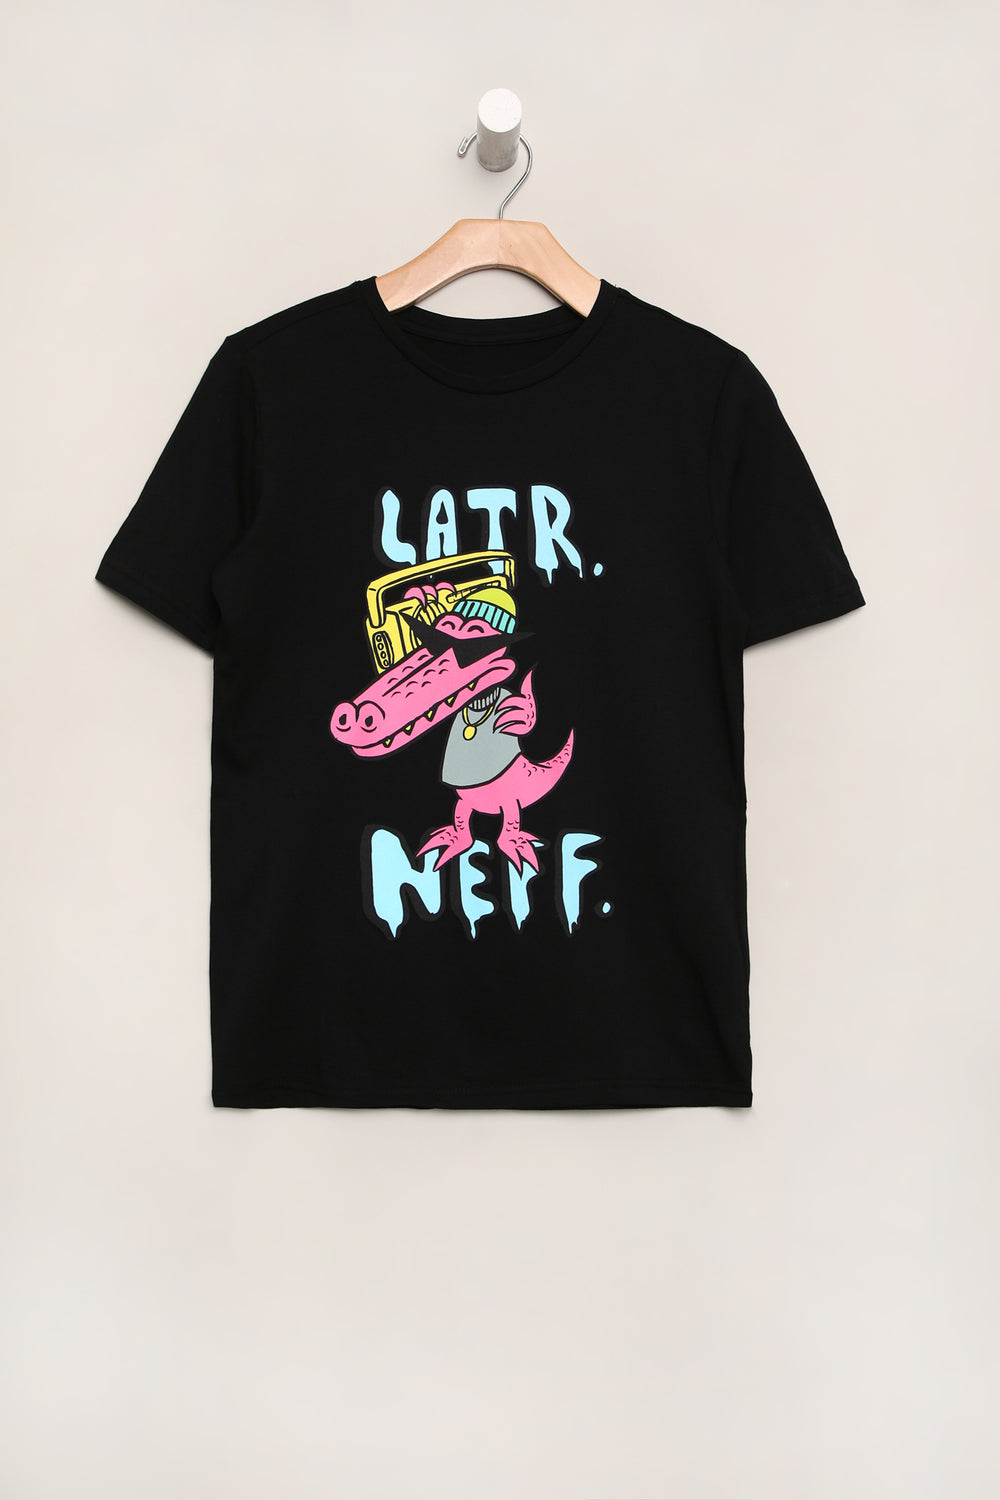 T-Shirt Imprimé Latr. Gator Neff Junior T-Shirt Imprimé Latr. Gator Neff Junior